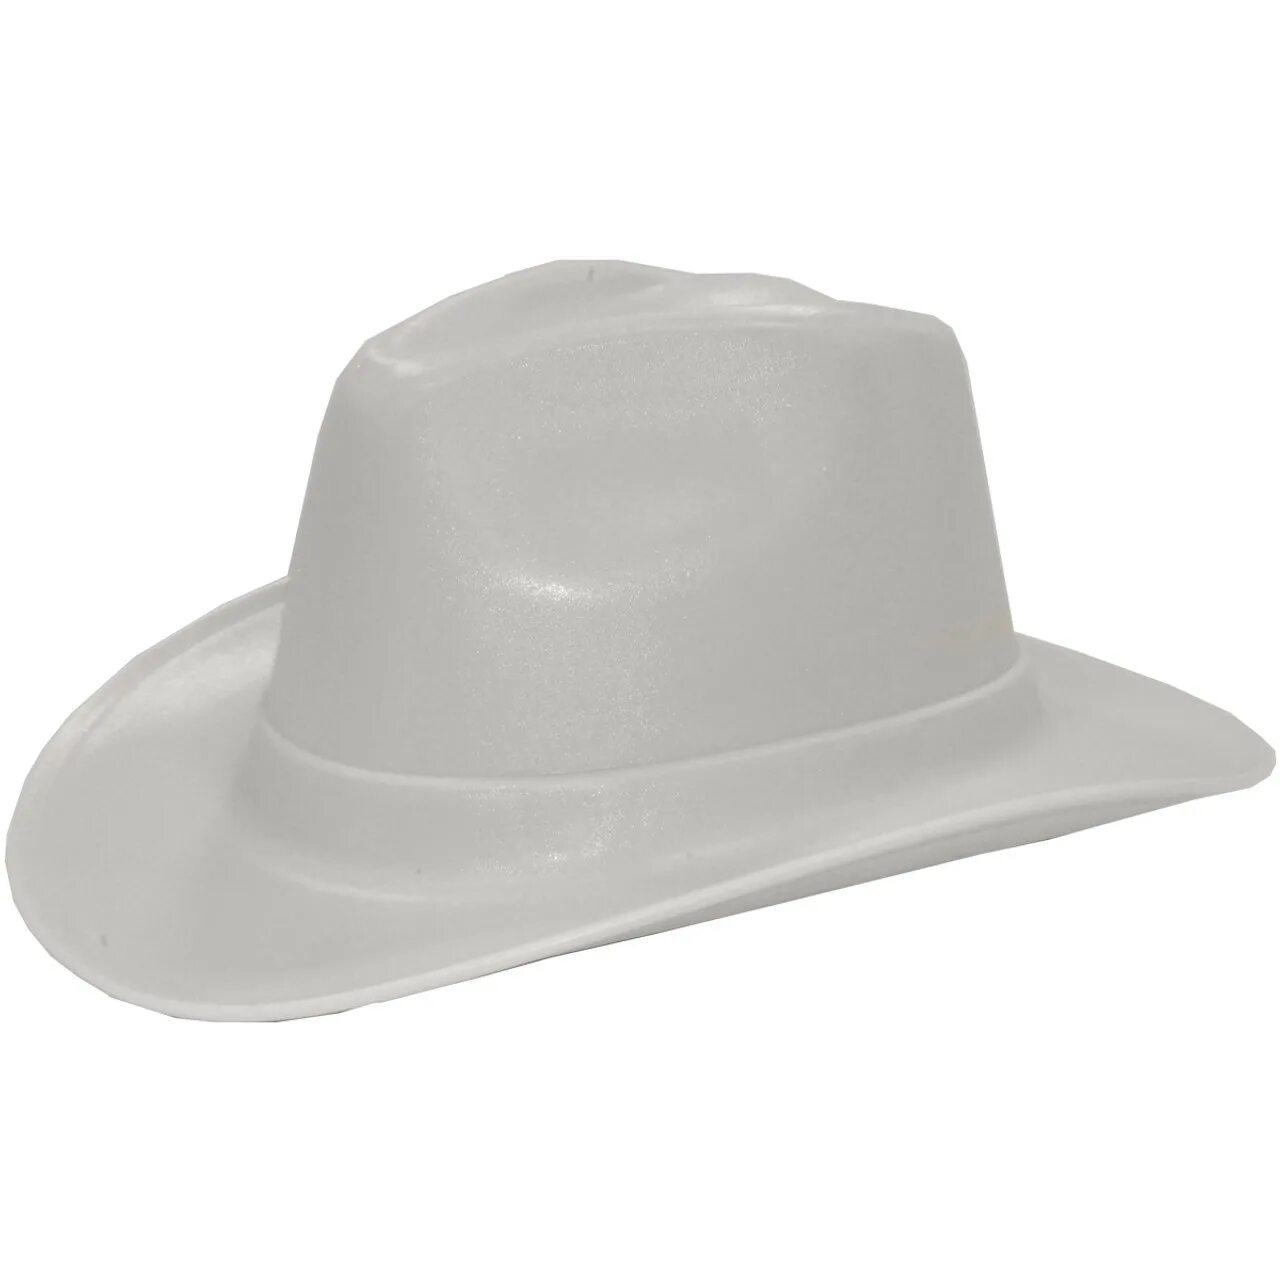 Vulka vcb100-00 hard hat строительная. Cowboy hat каска. Vulcan Cowboy Style hard hat White. Каска защитная ковбойская шляпа. Каска ковбой